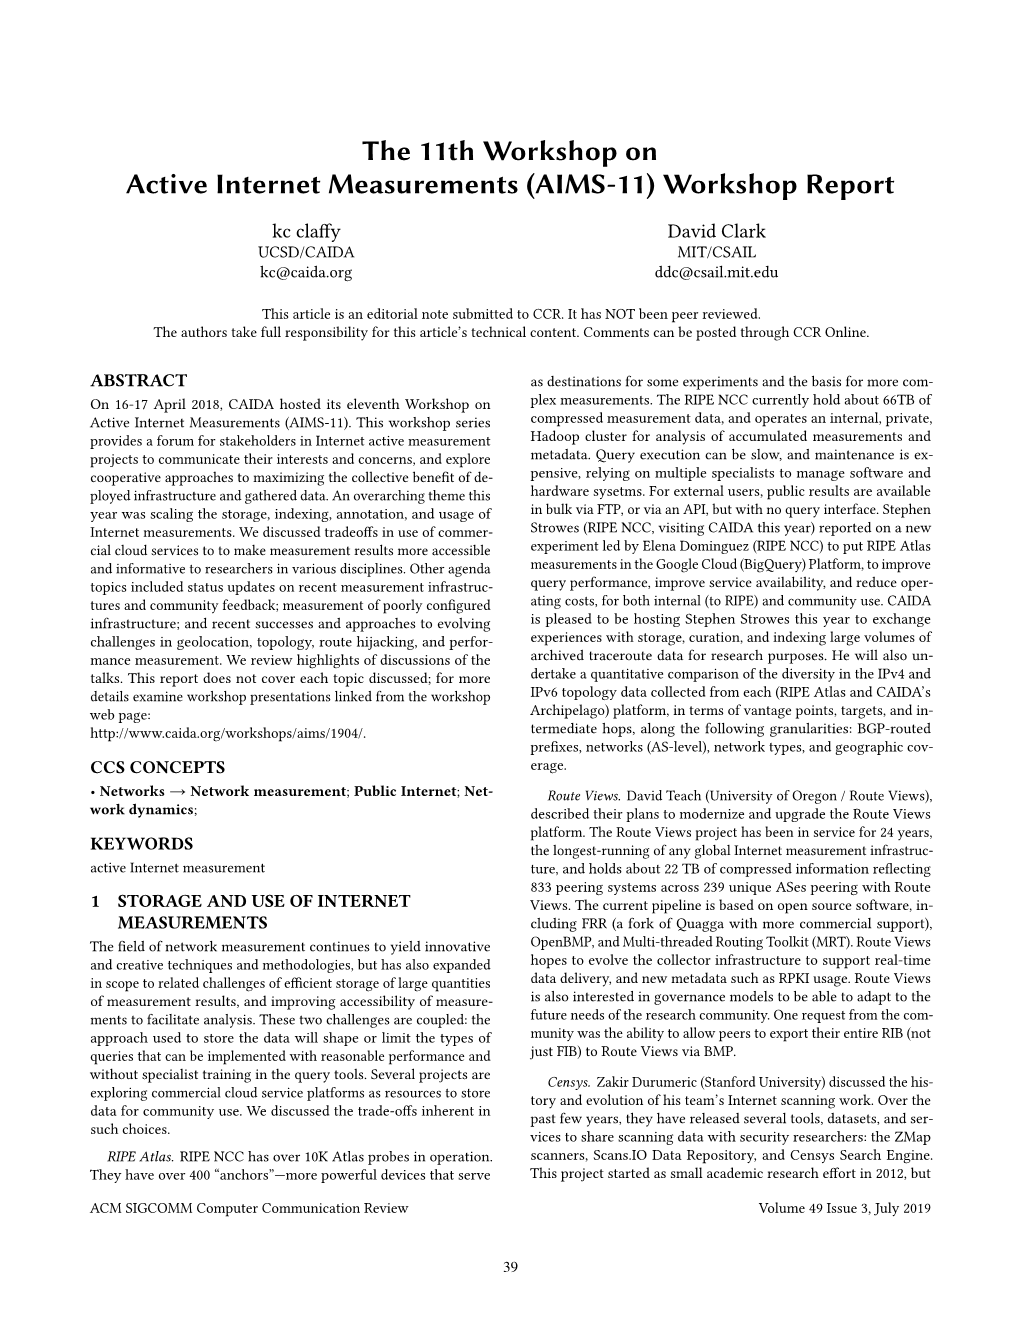 The 11Th Workshop on Active Internet Measurements (AIMS-11) Workshop Report